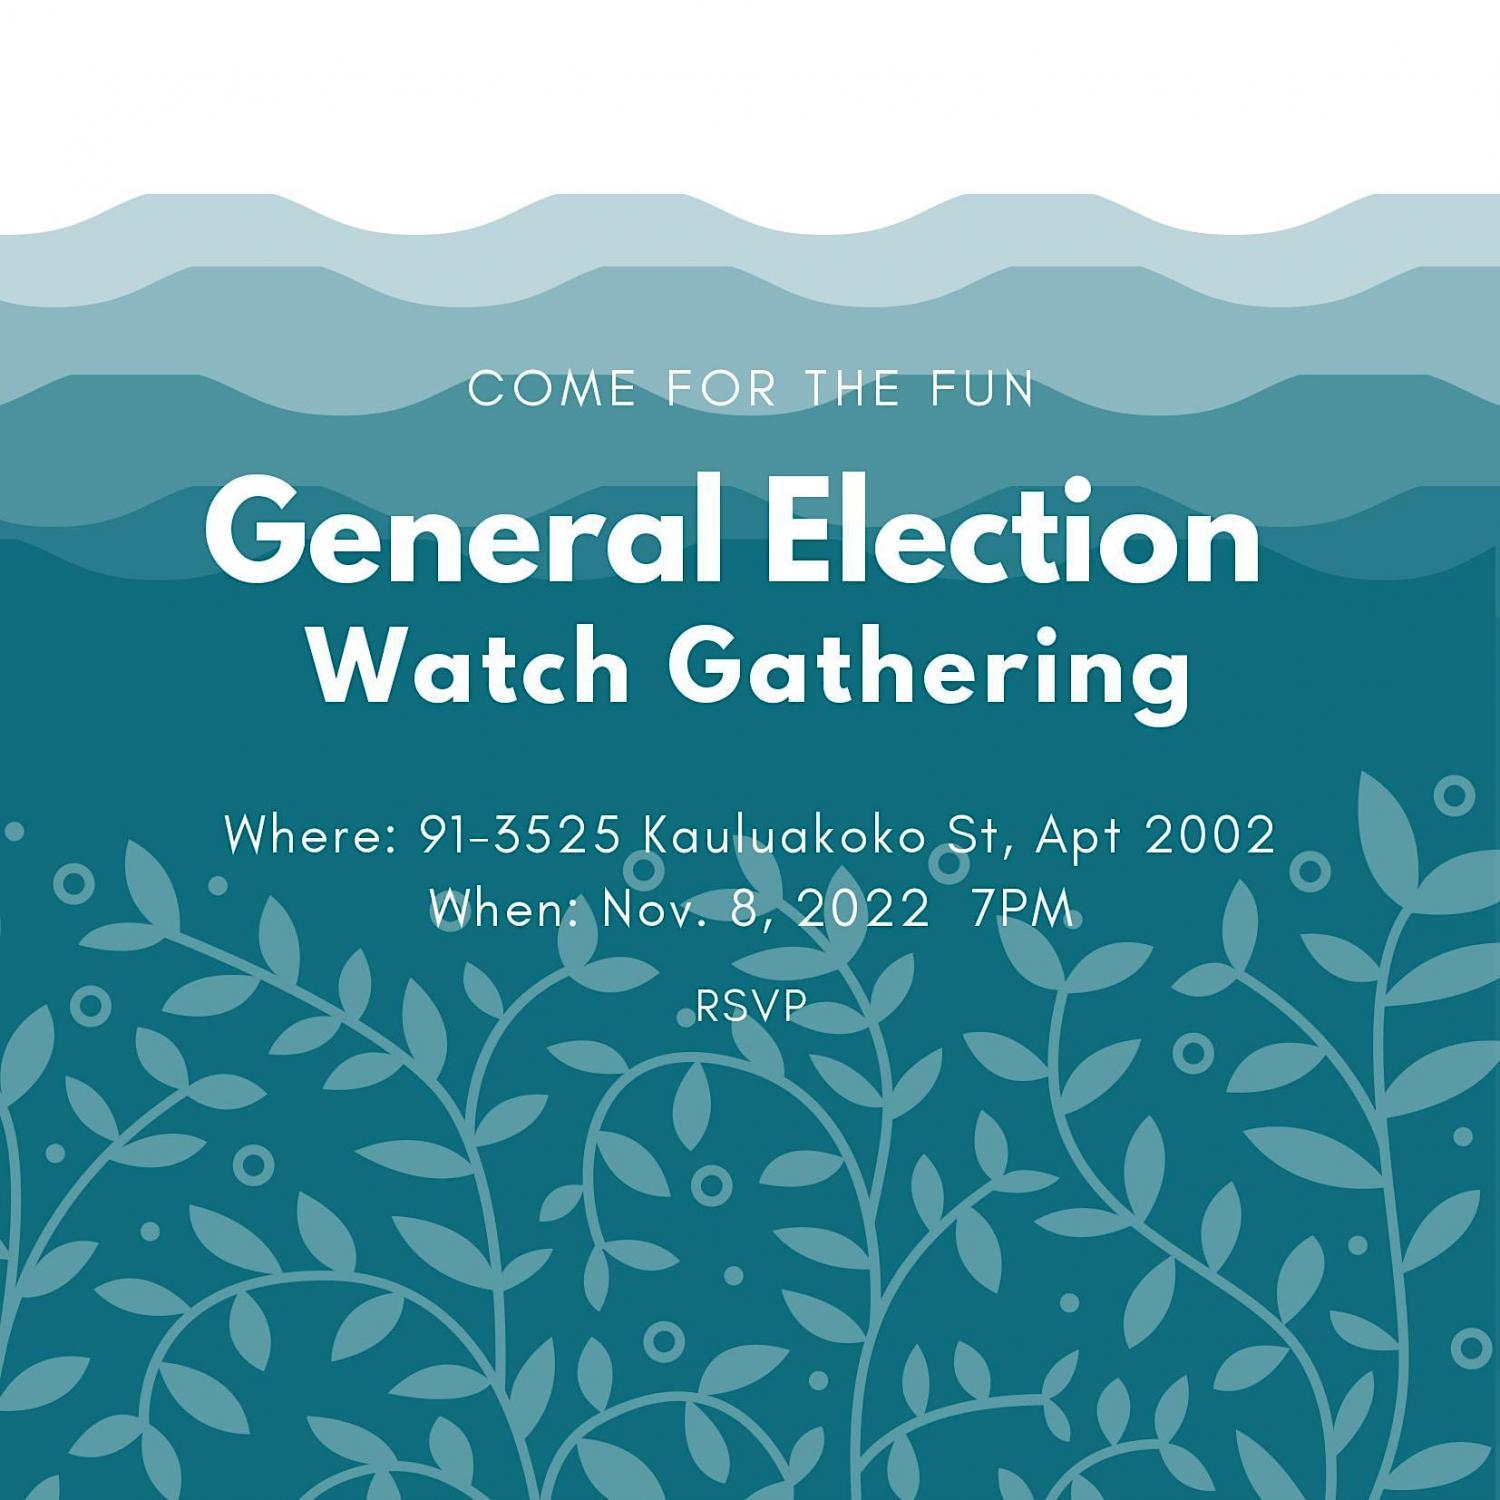 General Election Watch Gathering: Elijah PIERICK (Hawaii House District 39)
Tue Nov 8, 7:00 PM - Tue Nov 8, 7:00 PM
in 20 days